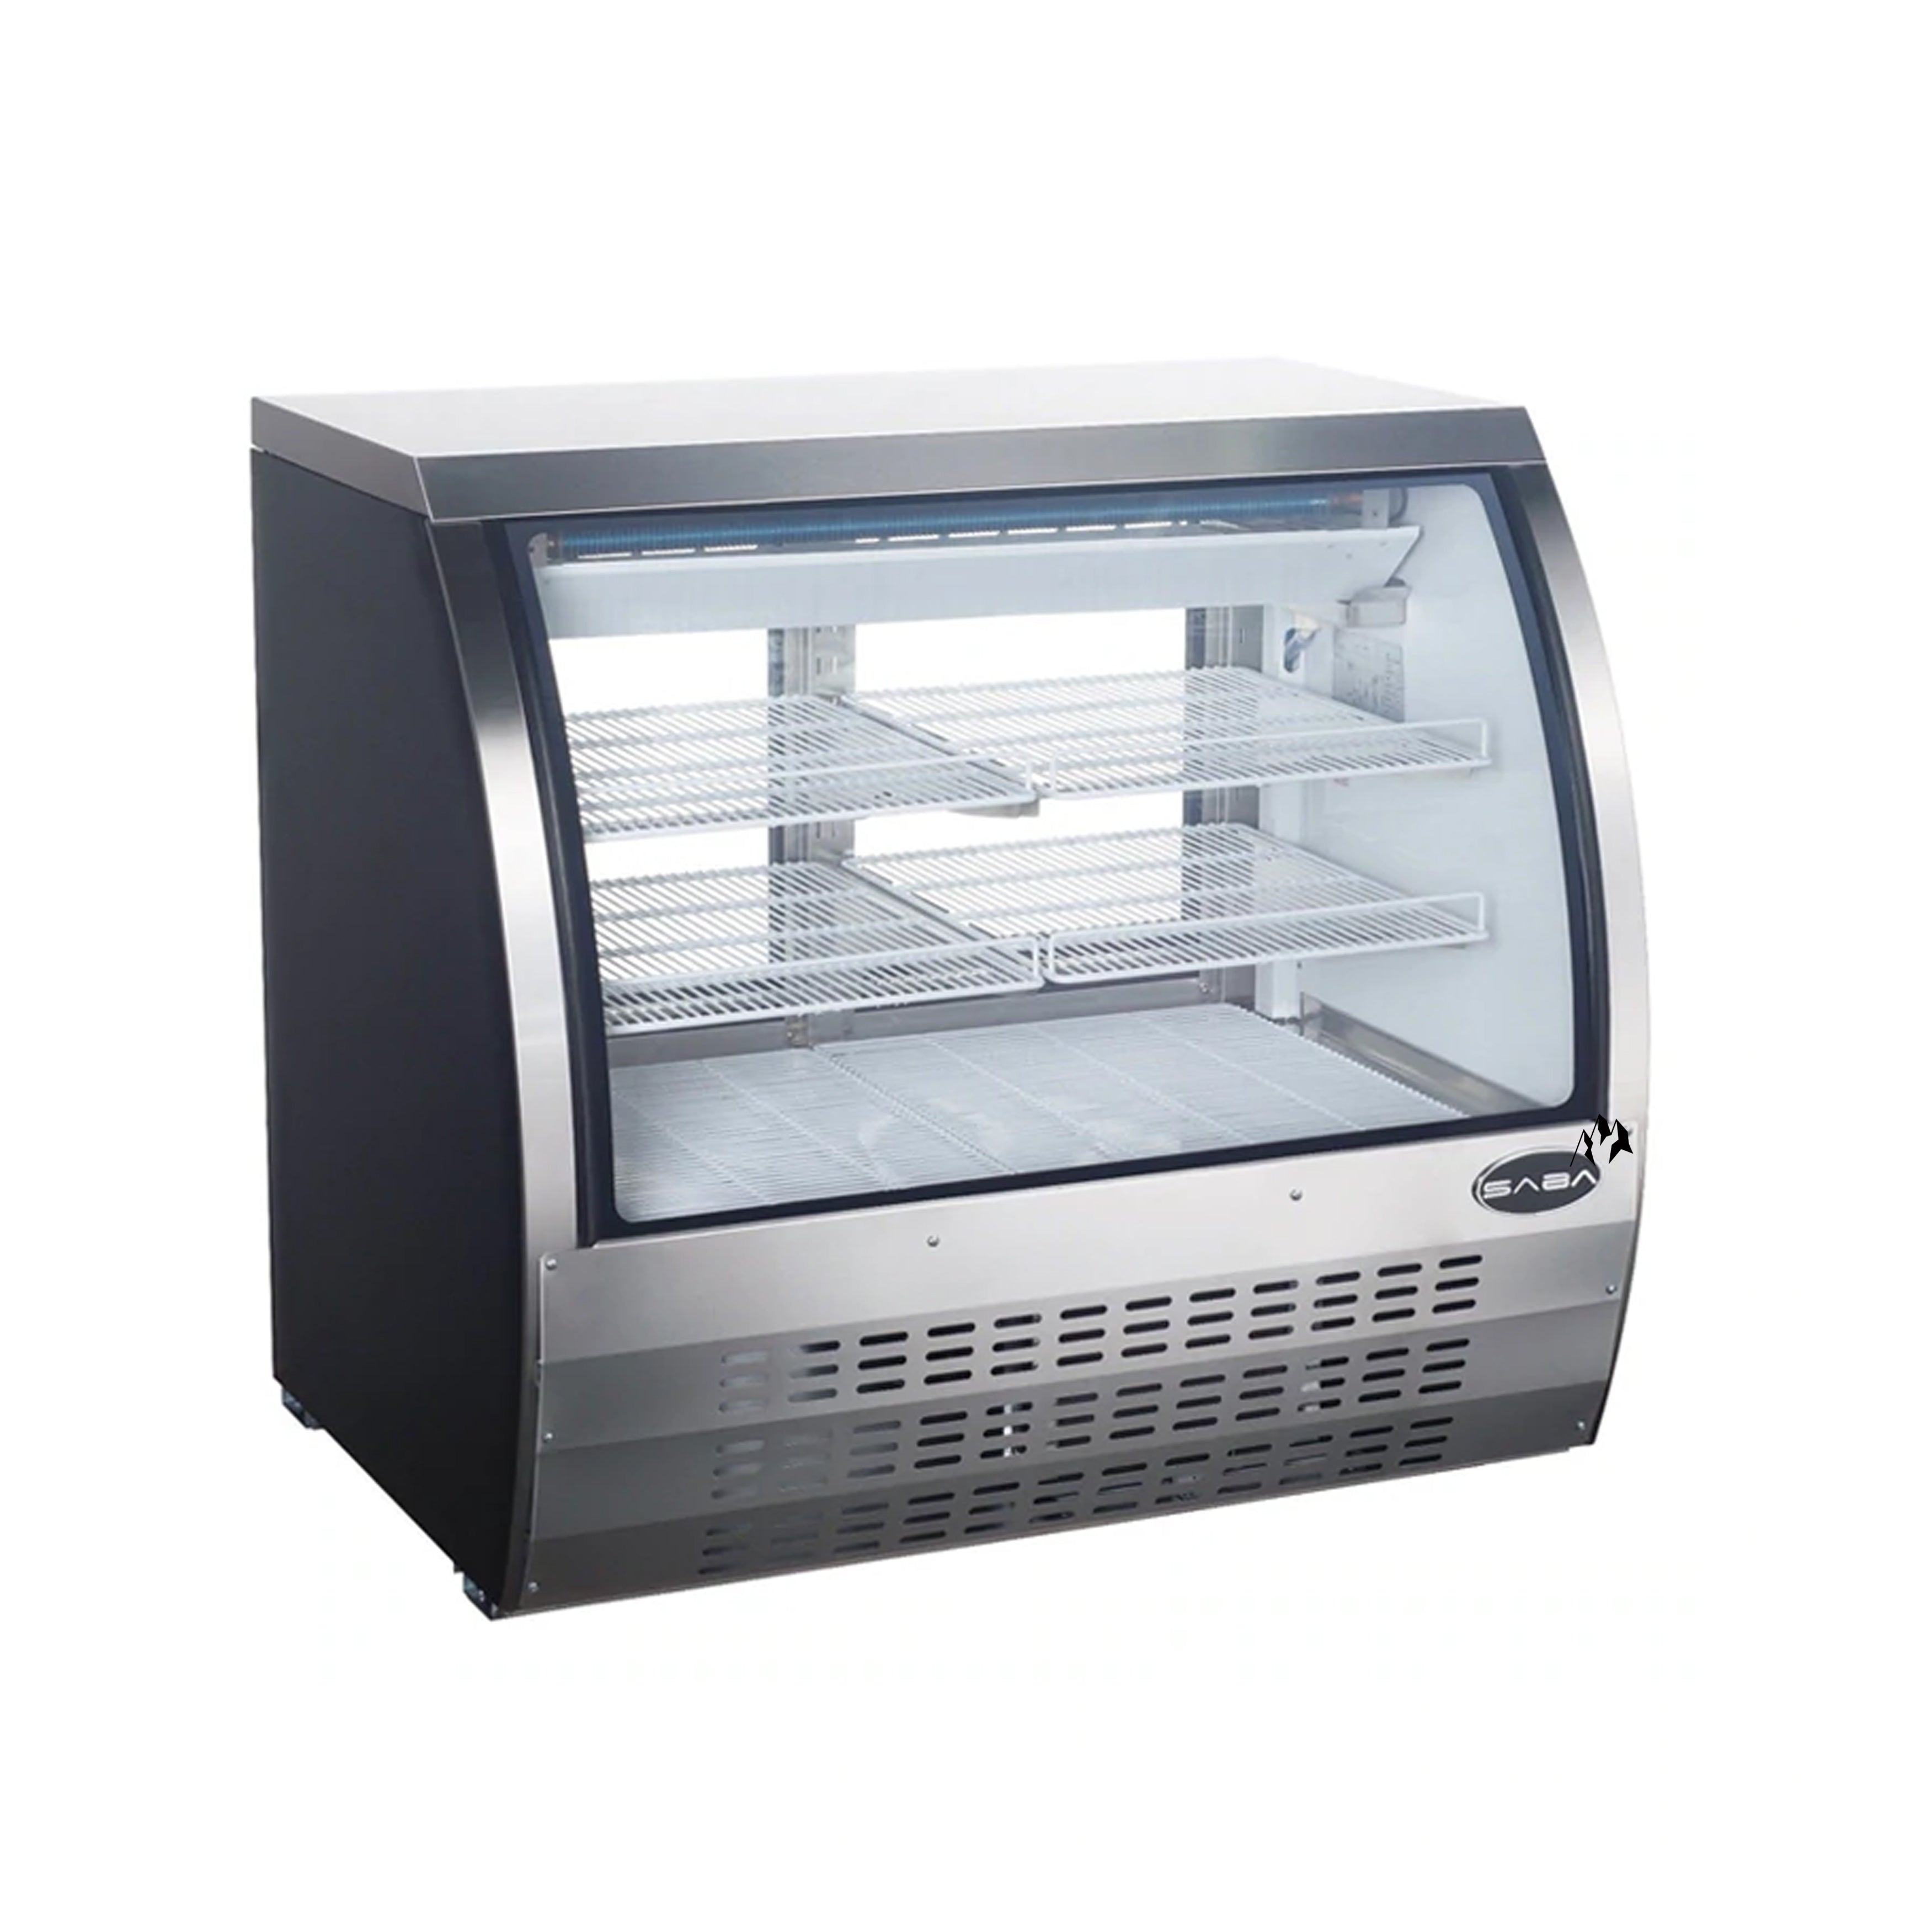 Saba - SCGG-47, Commercial 42" Curved Glass Deli Case Refrigerator 18 cu.ft.